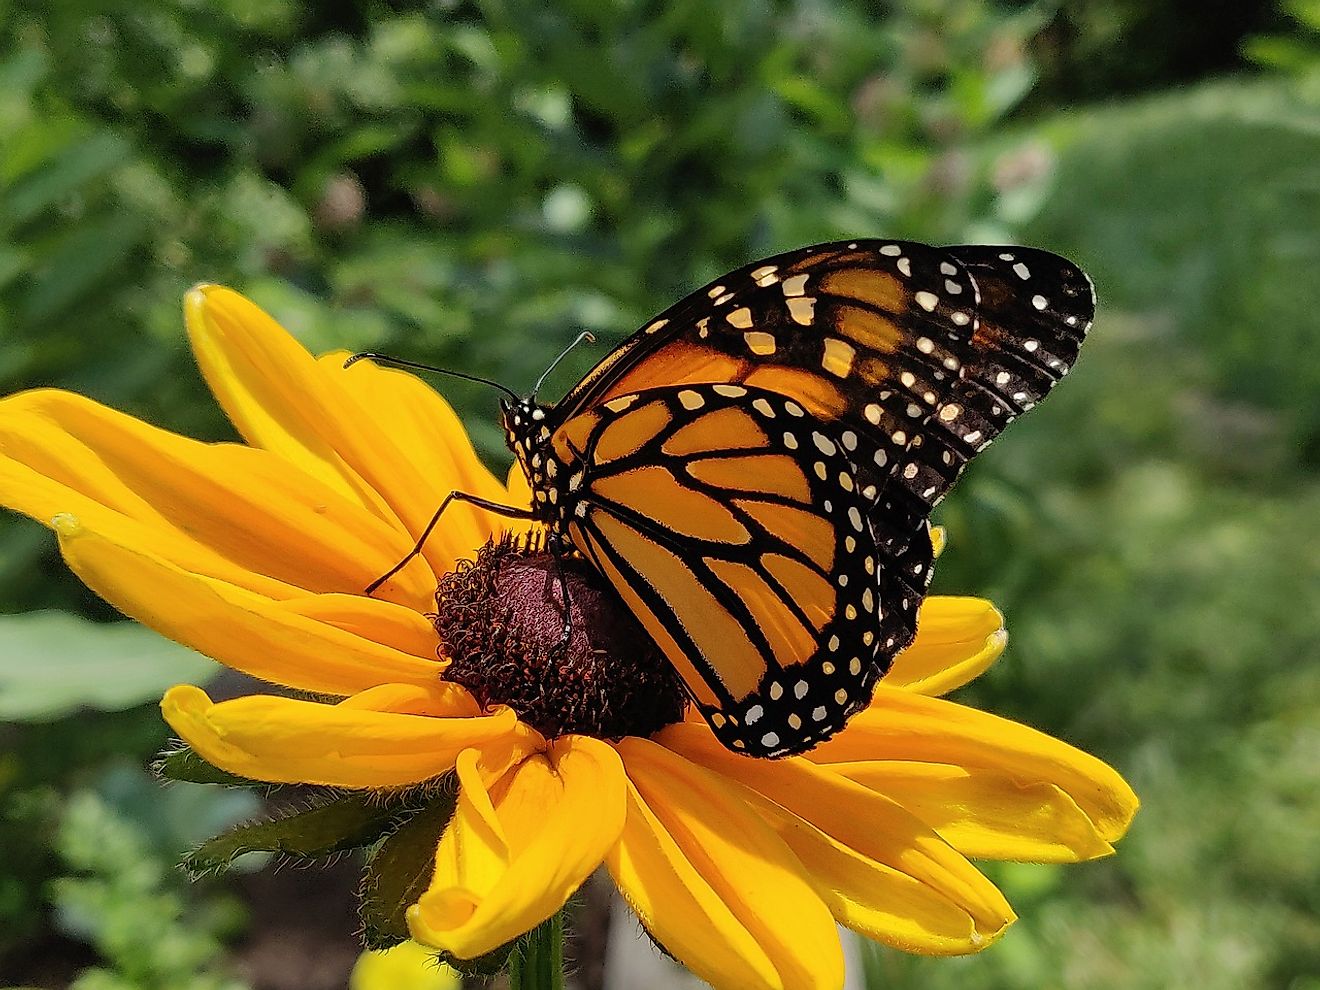 A beautiful monarch butterfly. Image credit: Stevenrumbalski/Pixabay